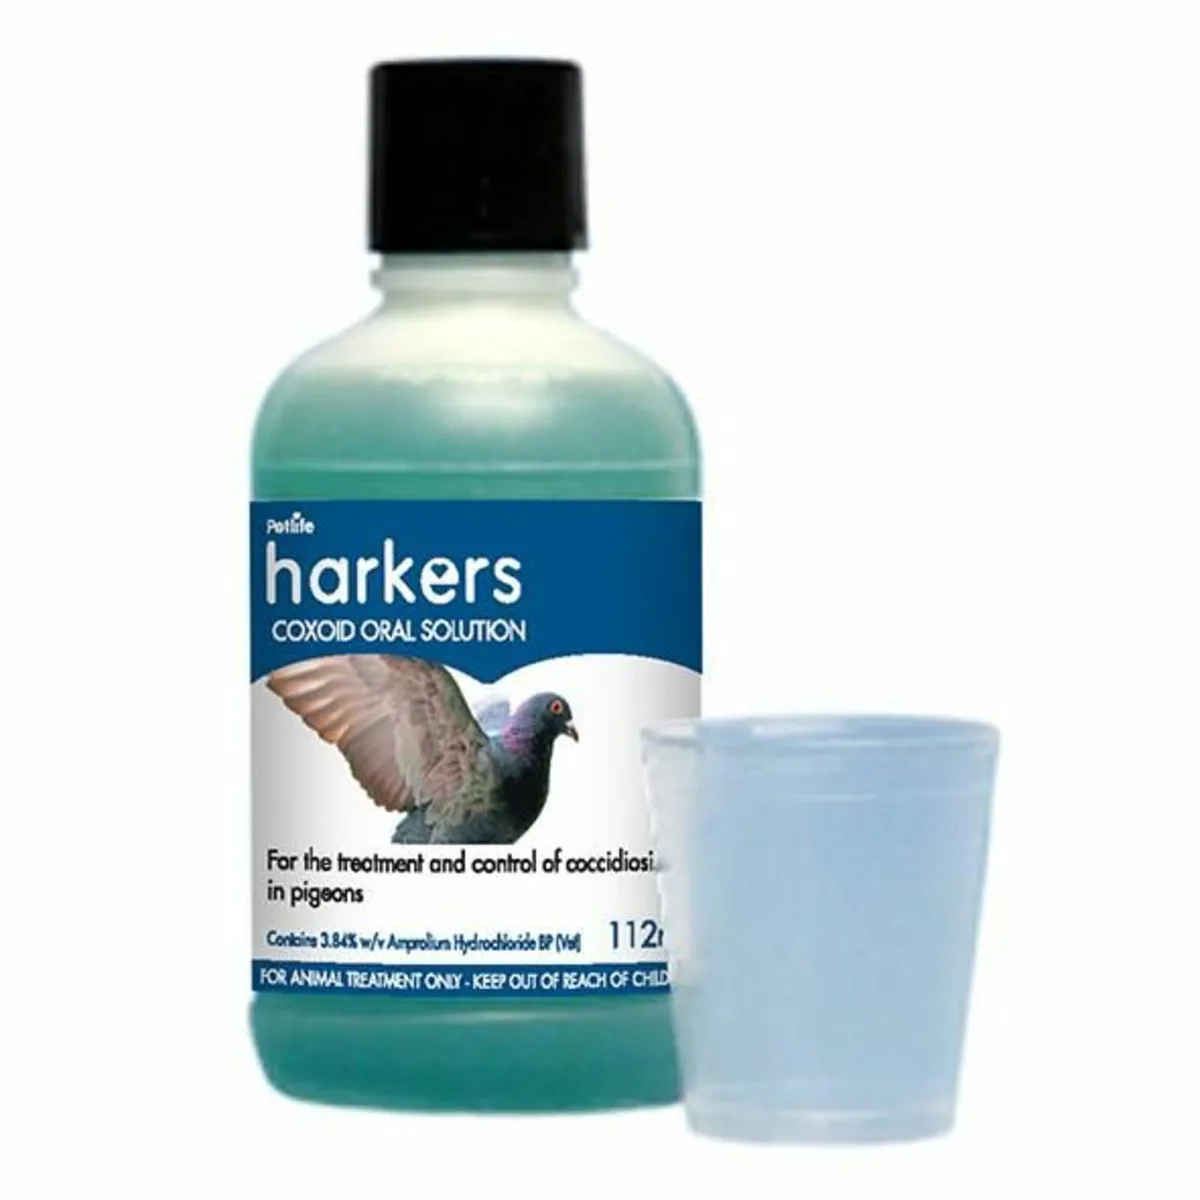 Harkers Bird Treatments & Smite Powders - Image 1